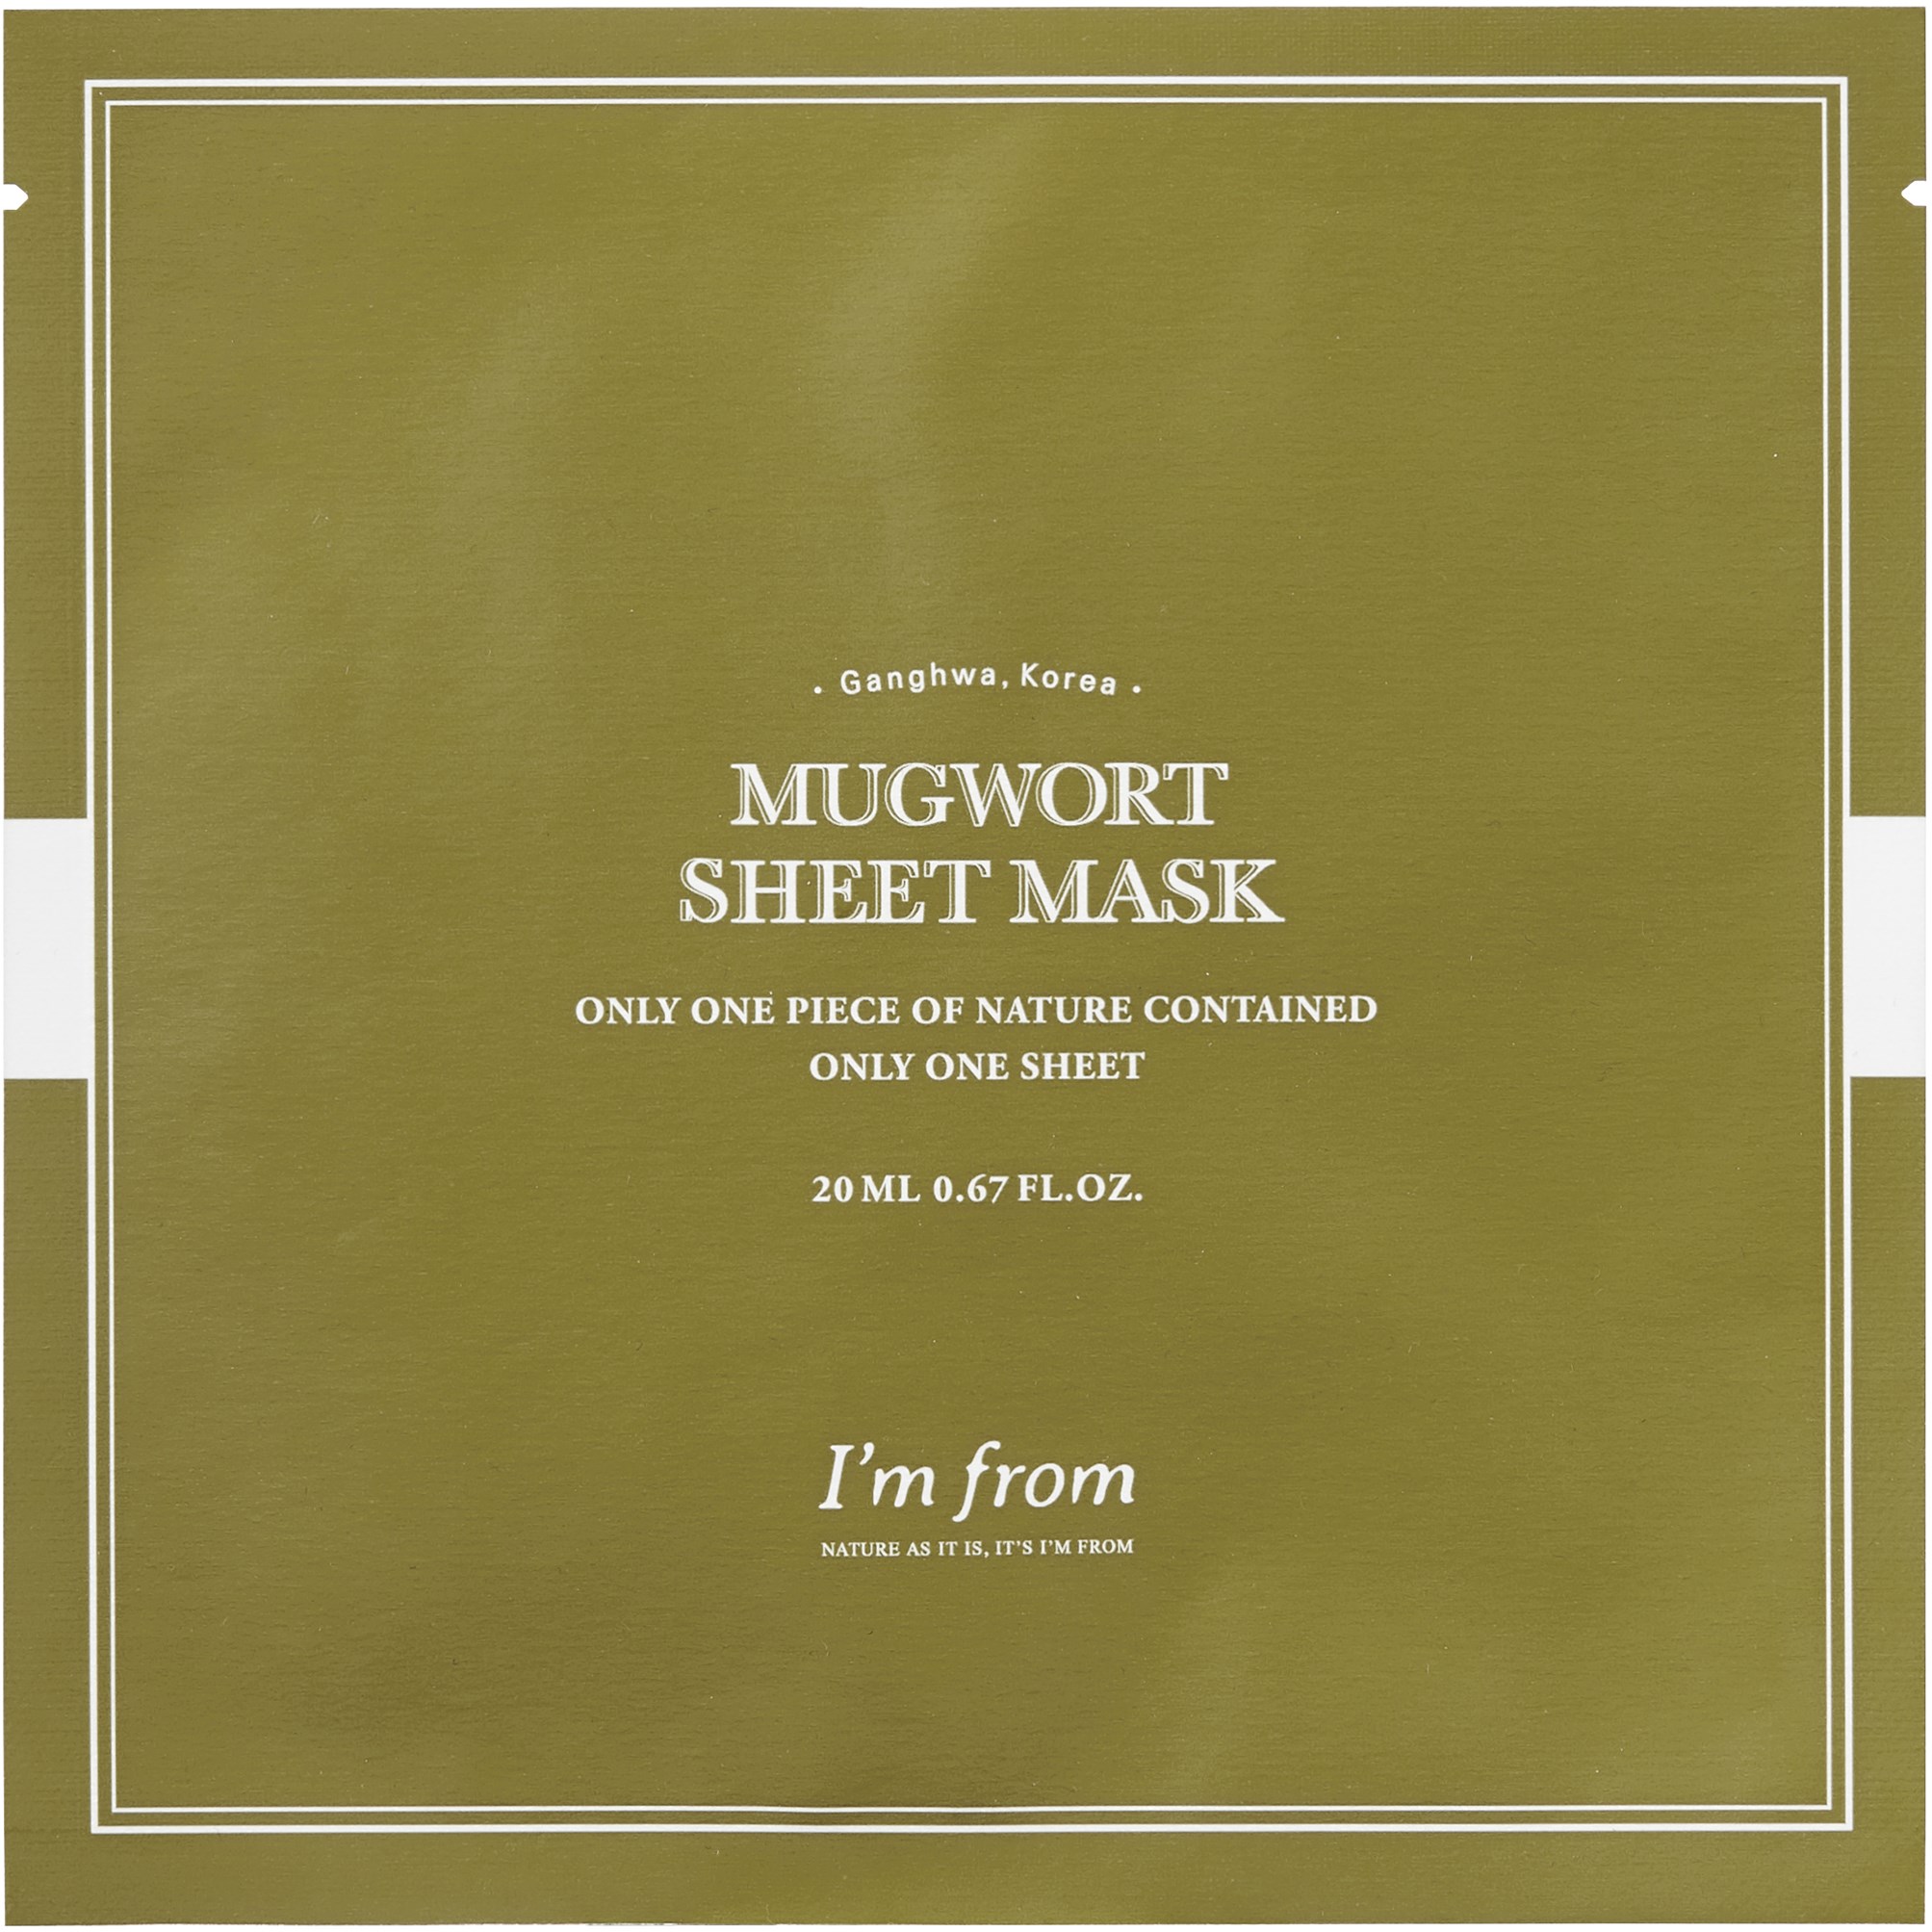 Im From Mugwort Sheet Mask 1 st